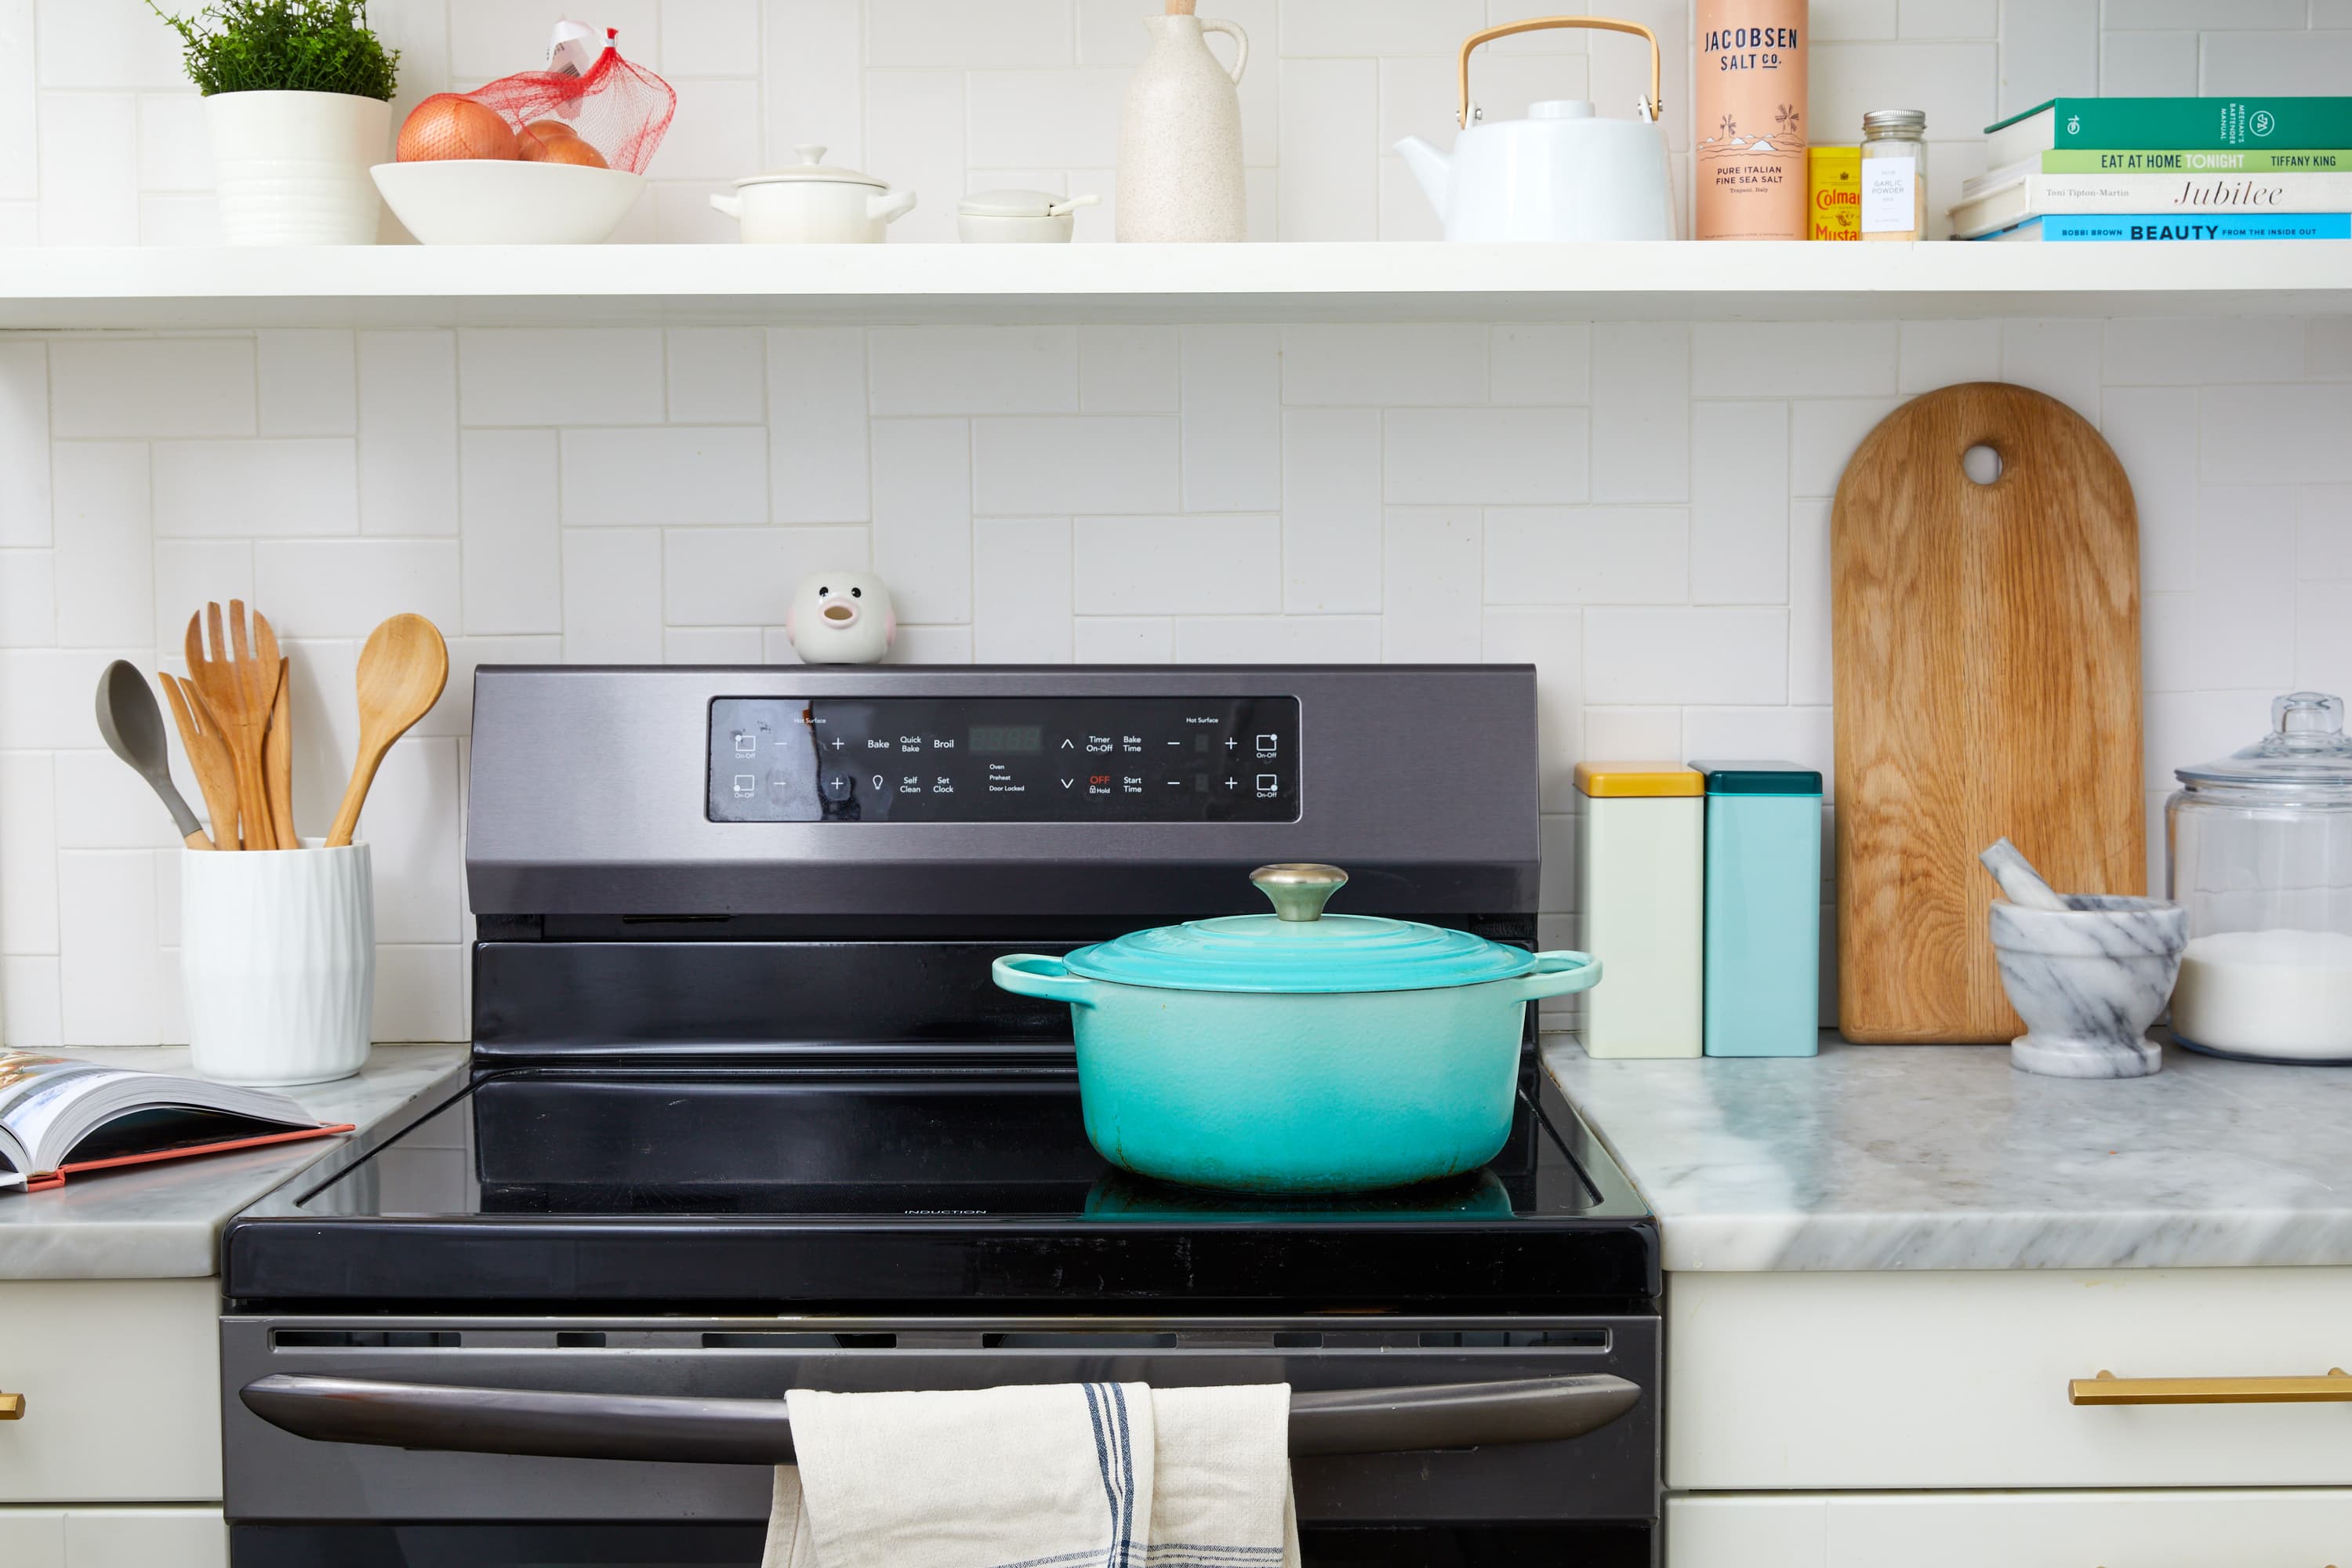 OXO Good Grips Deep Clean Brush Set for Kitchen Bathroom Appliances